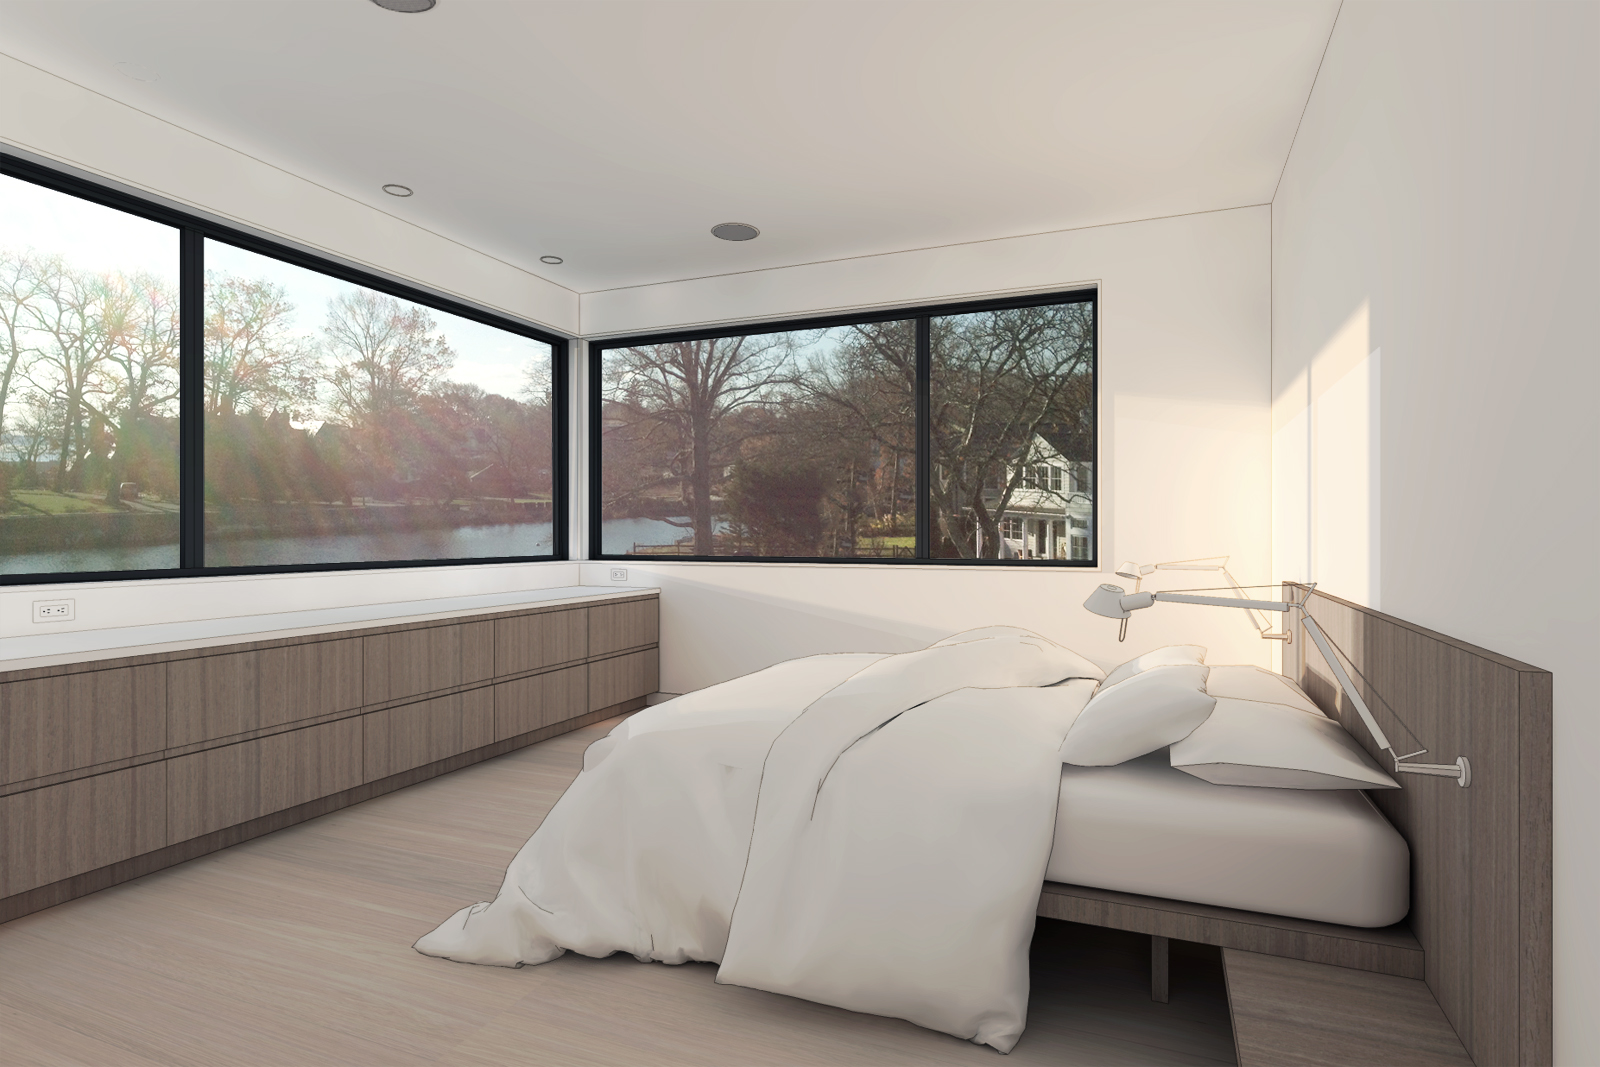 06-res4-resolution-4-architecture-modern-modular-prefab-douglas-lane-house-interior-master-bedroom-rendering.jpg